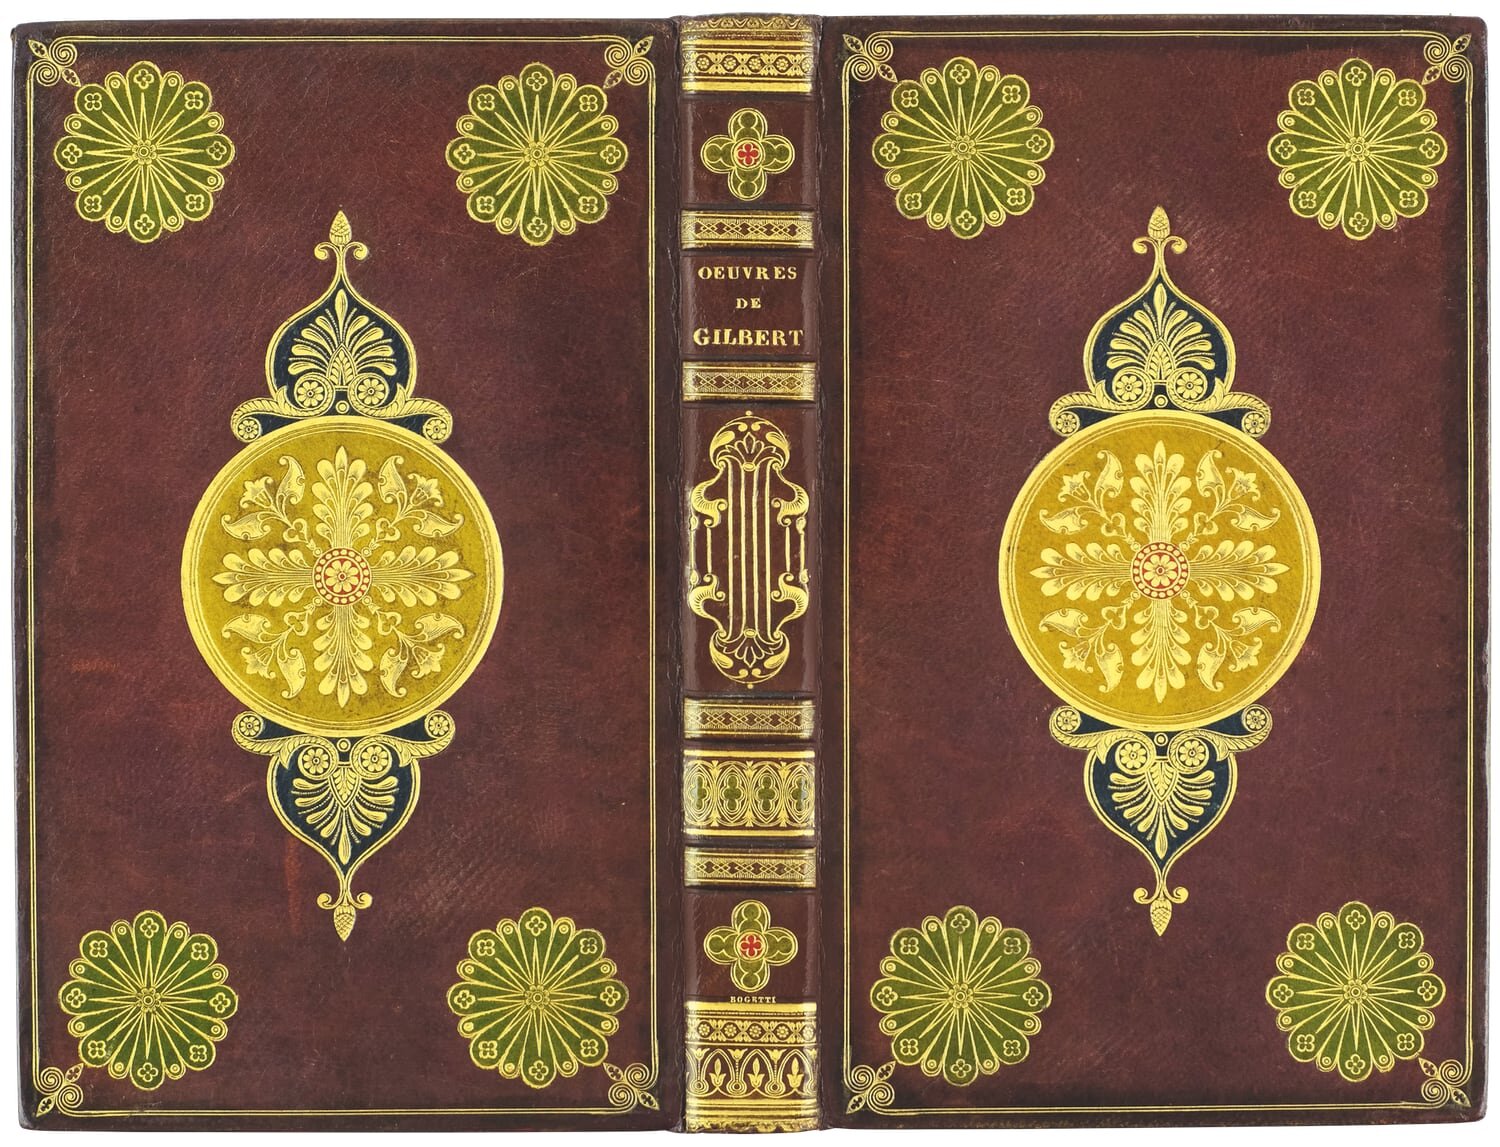  More rosettes; bindings by Duplanil fils [no. 558], Thouvenin [no. 438], Bogetti [no. 259], and Livre Mignard [no. 420]. 